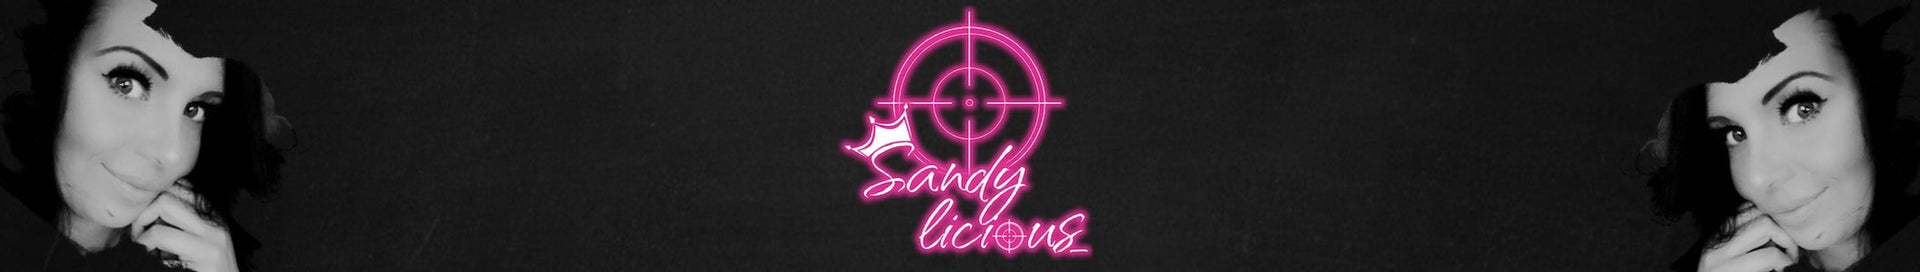 Sandylicious_